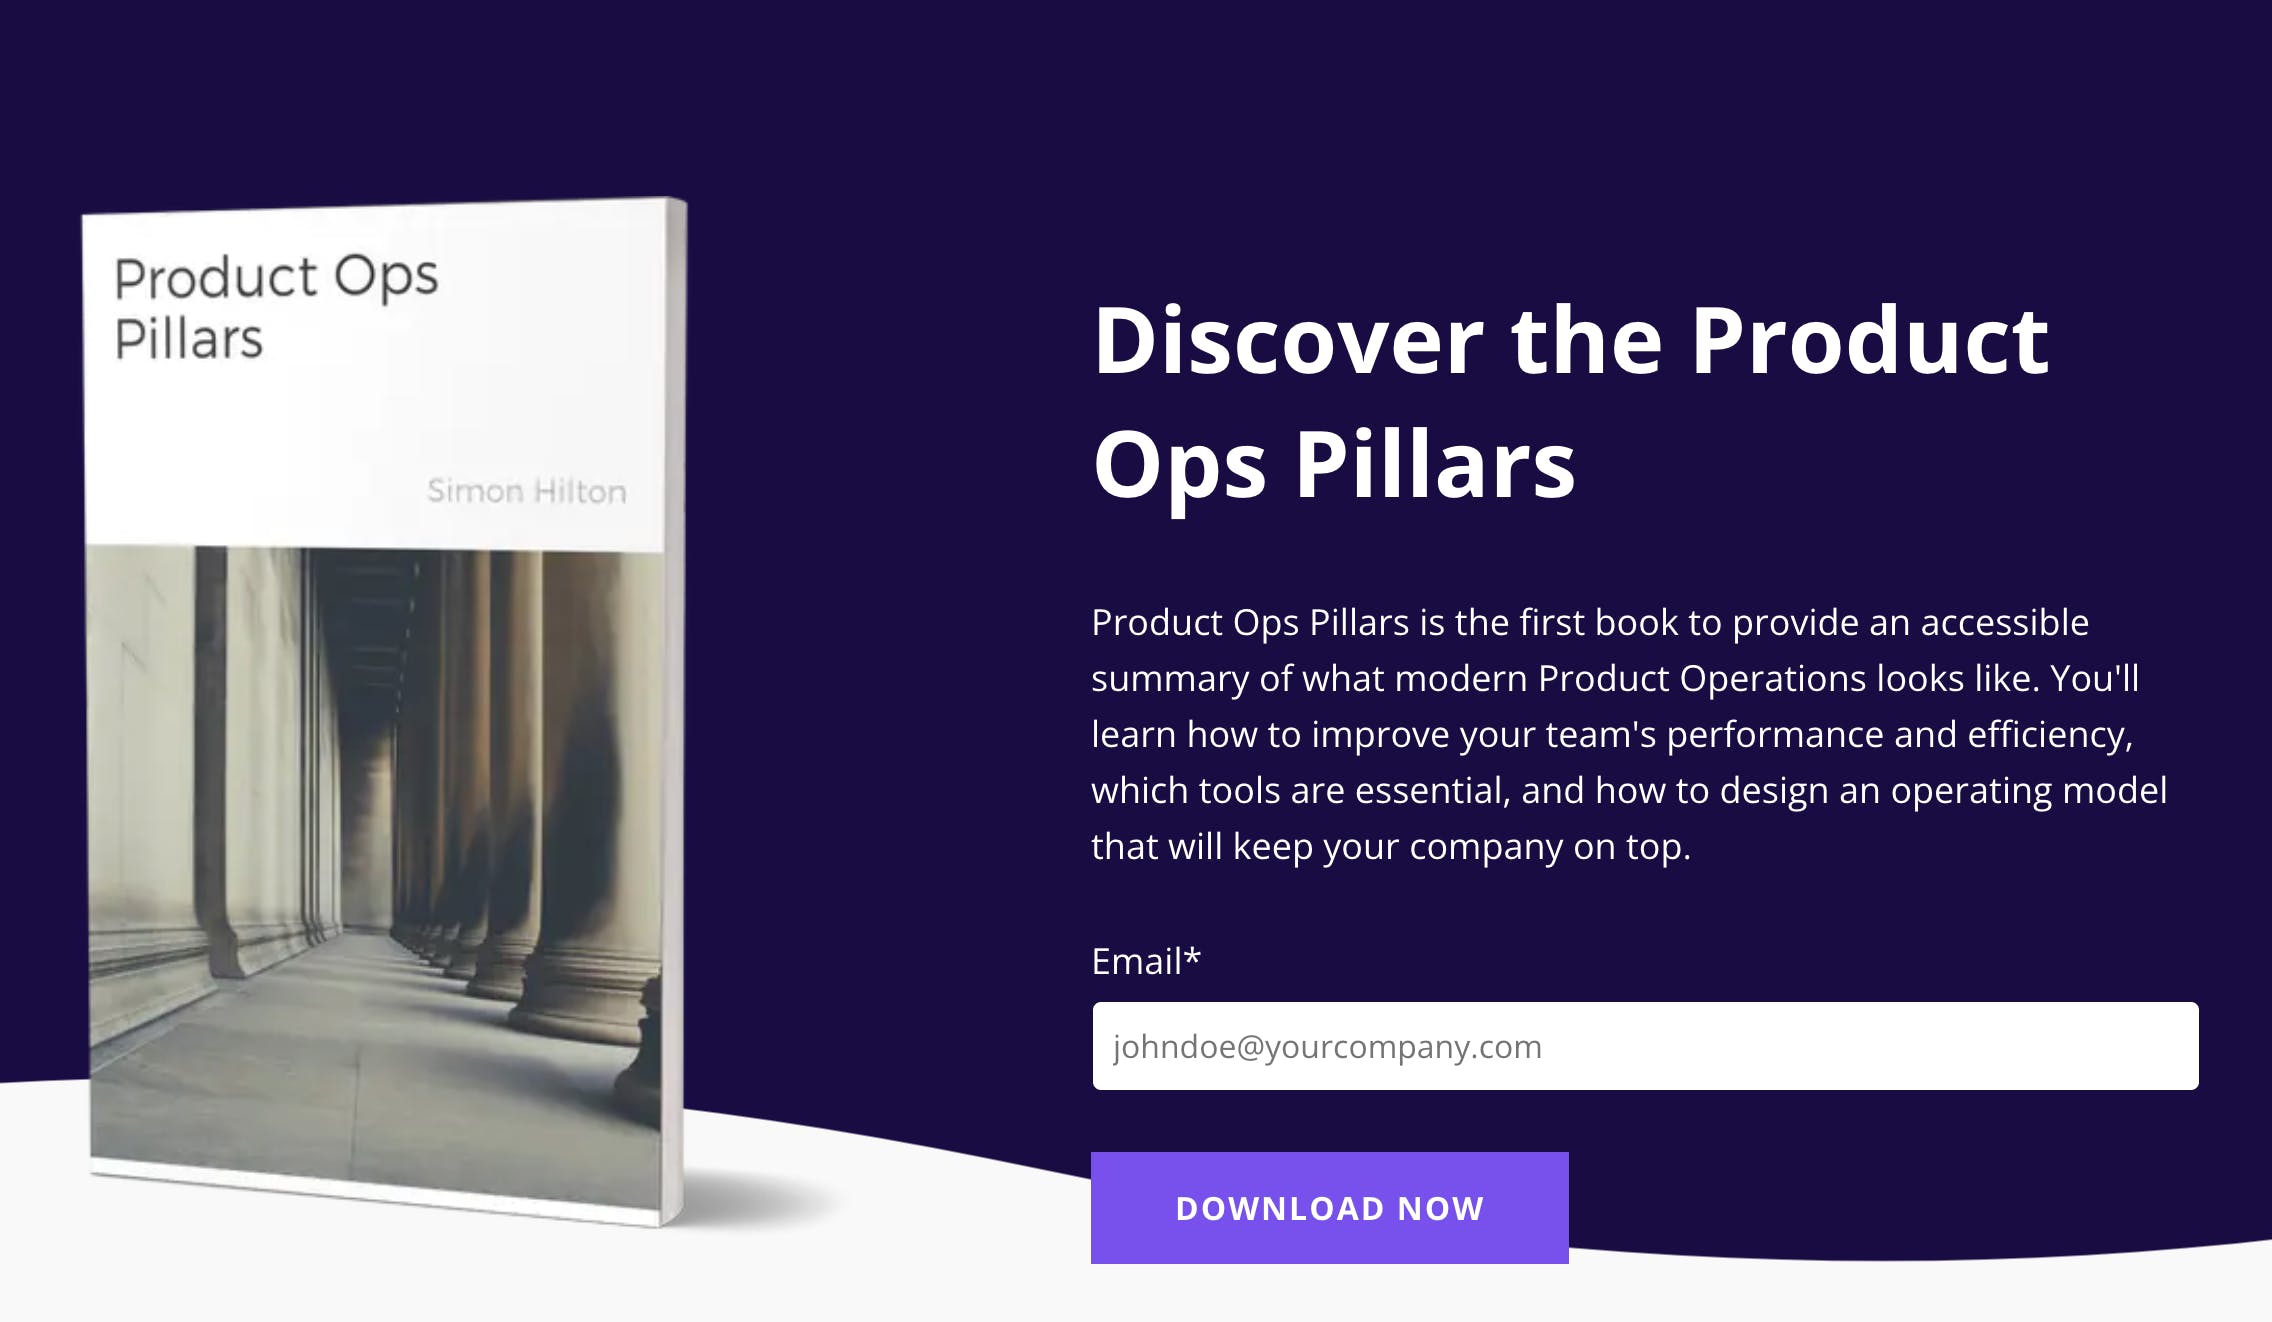 Product Ops Pillars media 1